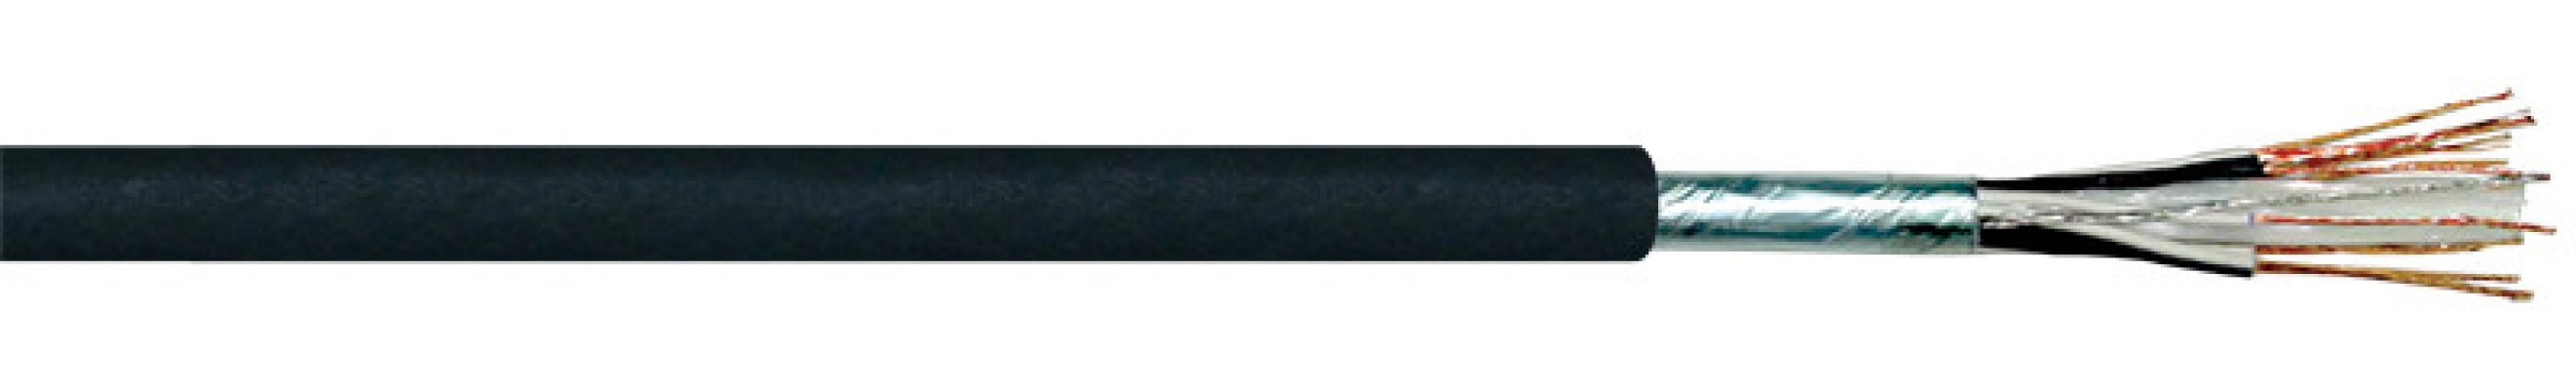 CSEP Instrument Cable Flame Retardant (Non-Armoured) CU/XLPE/OSCR/PVC-FR (Aluminium Foil Screen Cable)